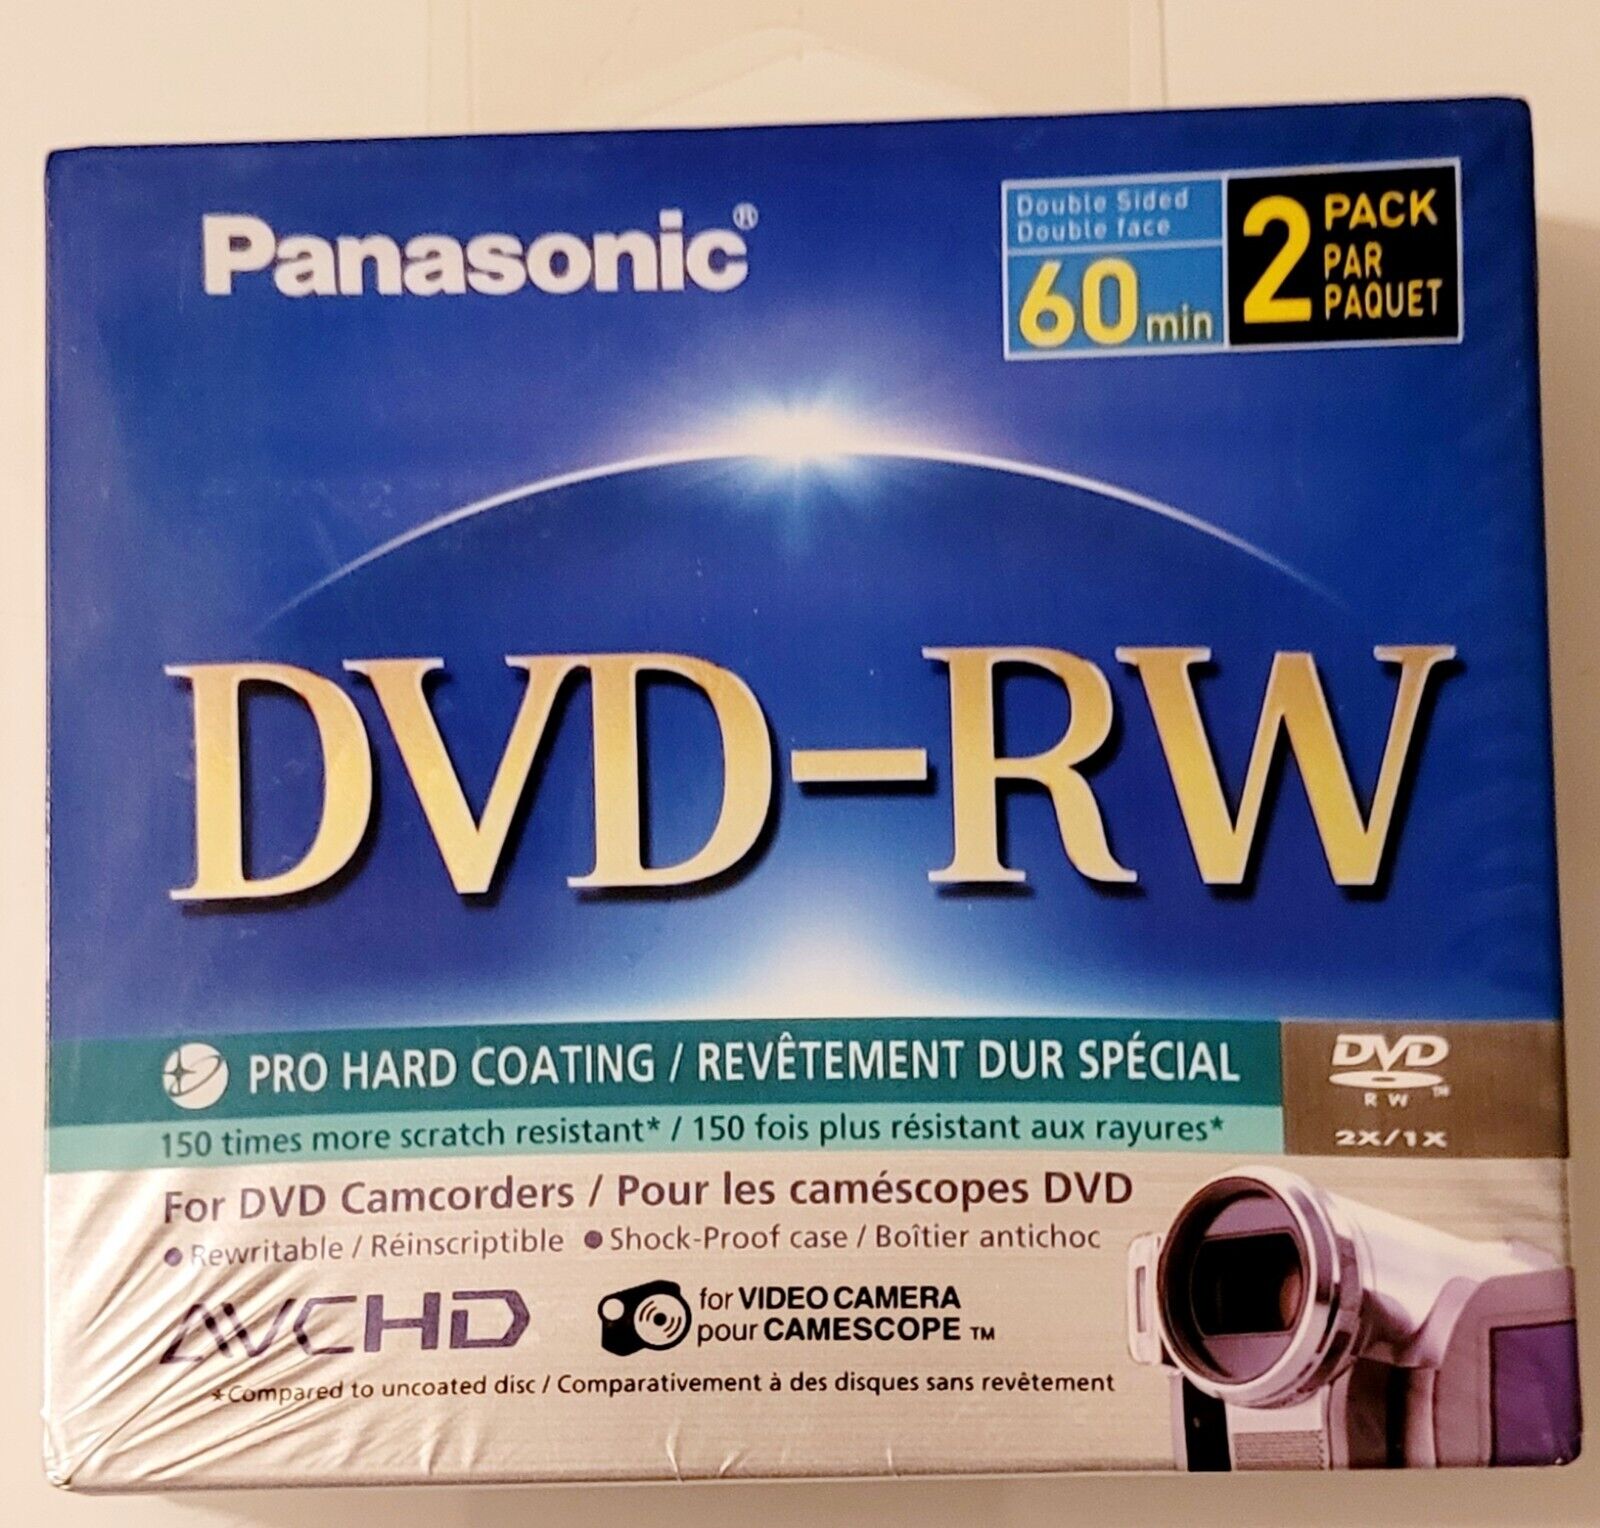 Panasonic DVD-RW 60 Min 2 PACK Pro Hard Coating Double Sided Rewritable NEW Seal